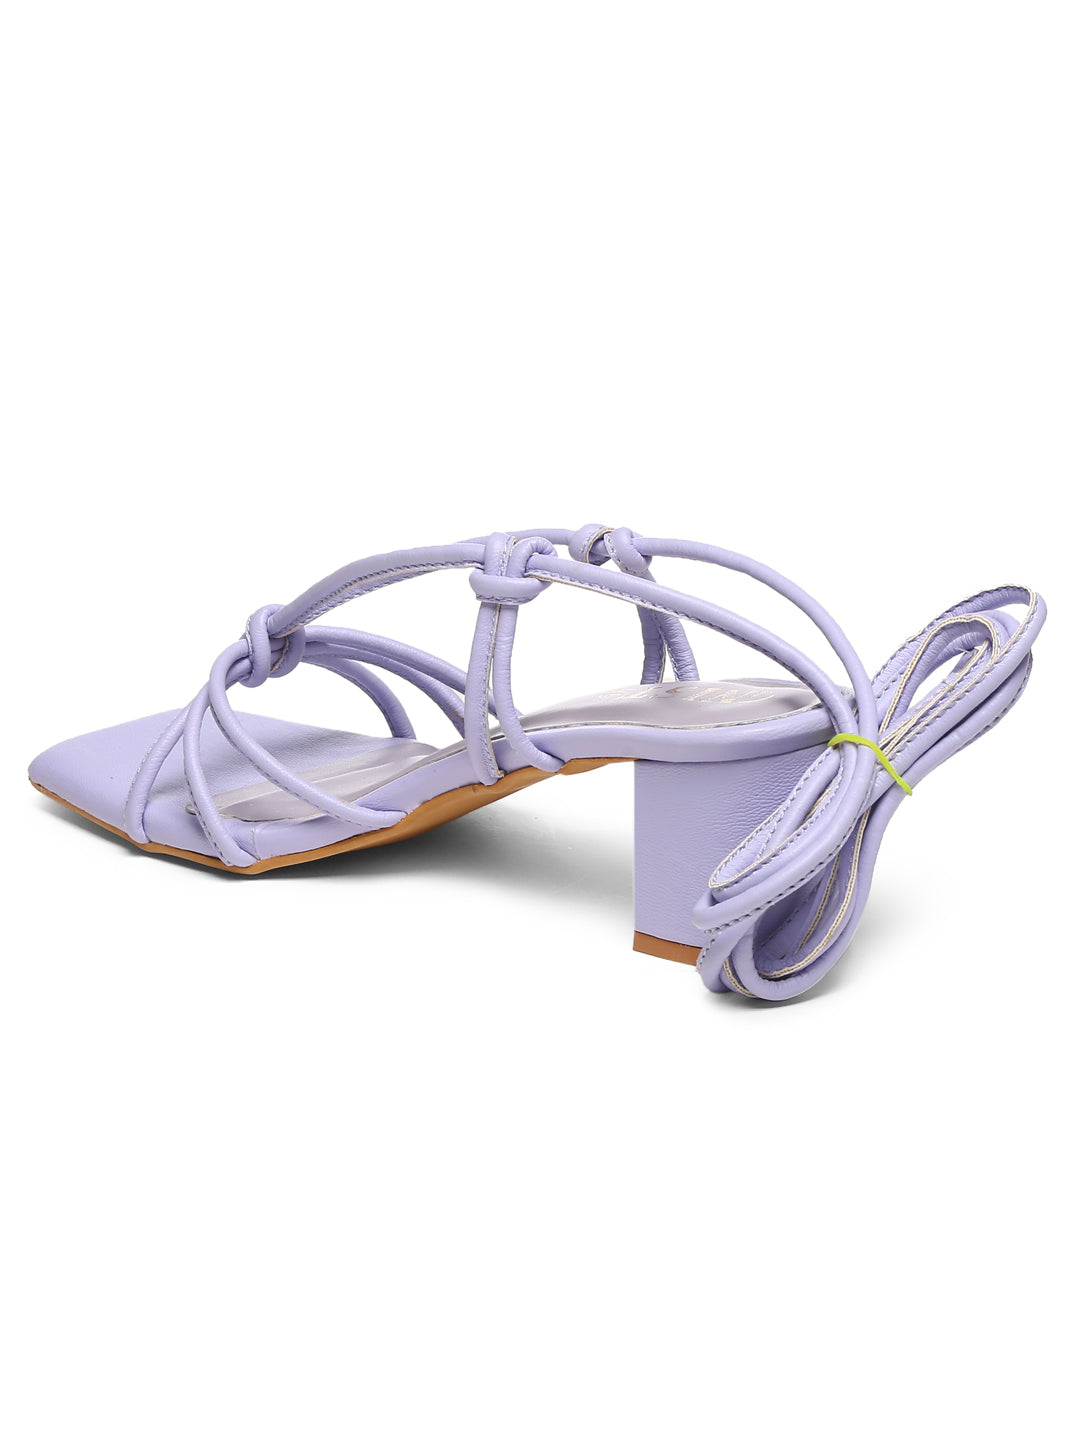 GNIST Lavender Strappy Tie up  Block Heel Sandal